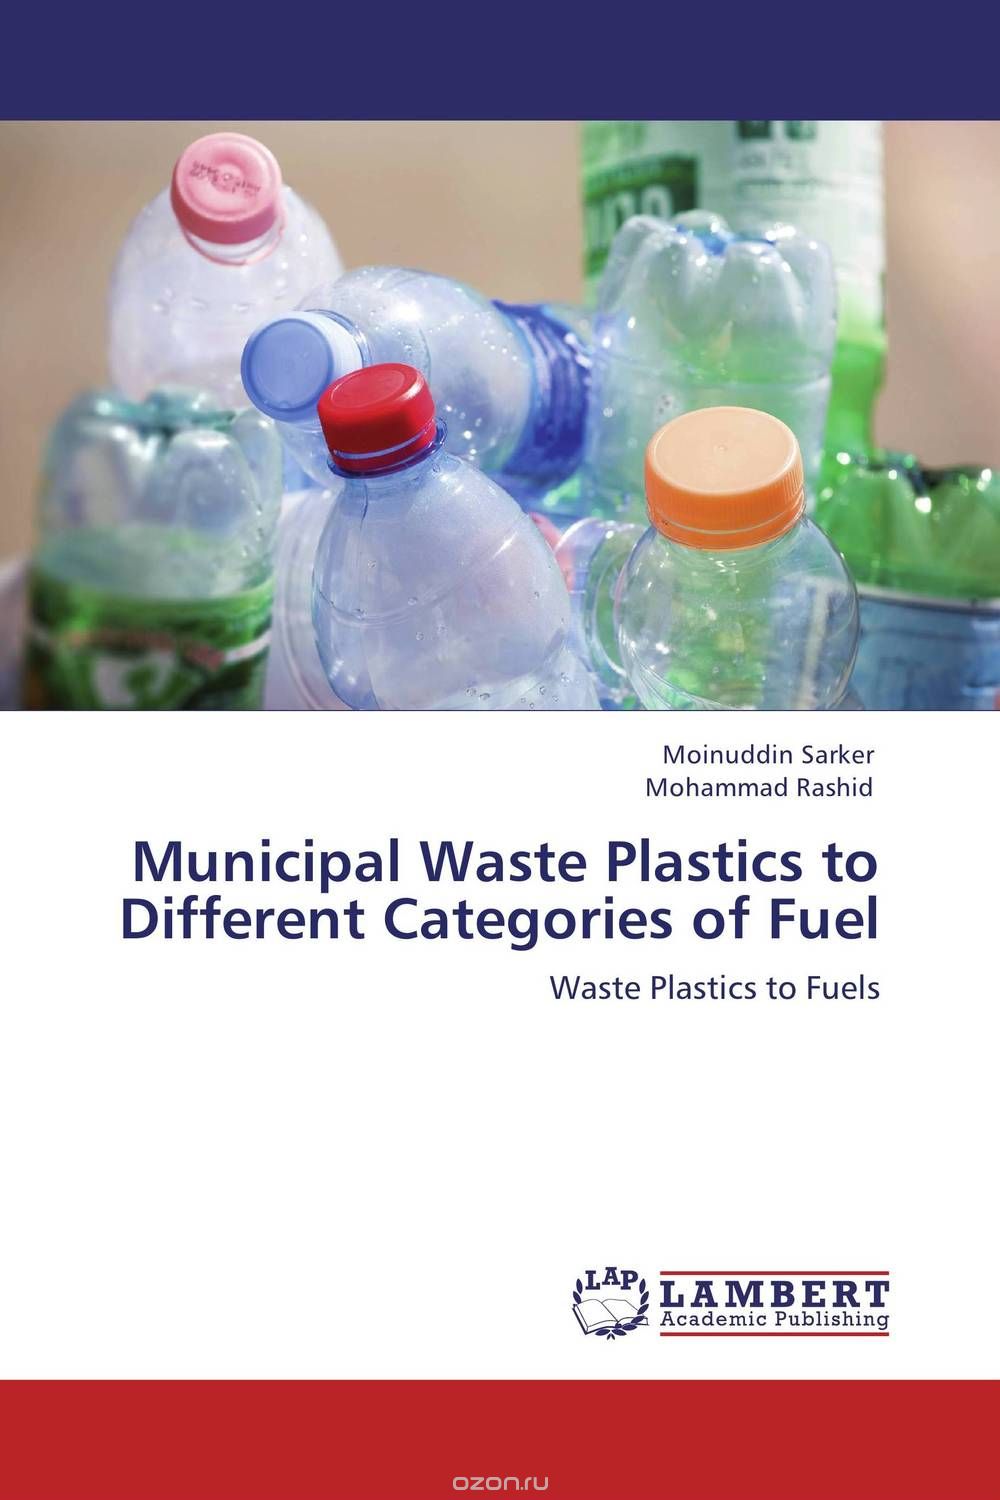 Скачать книгу "Municipal Waste Plastics to Different Categories of Fuel"